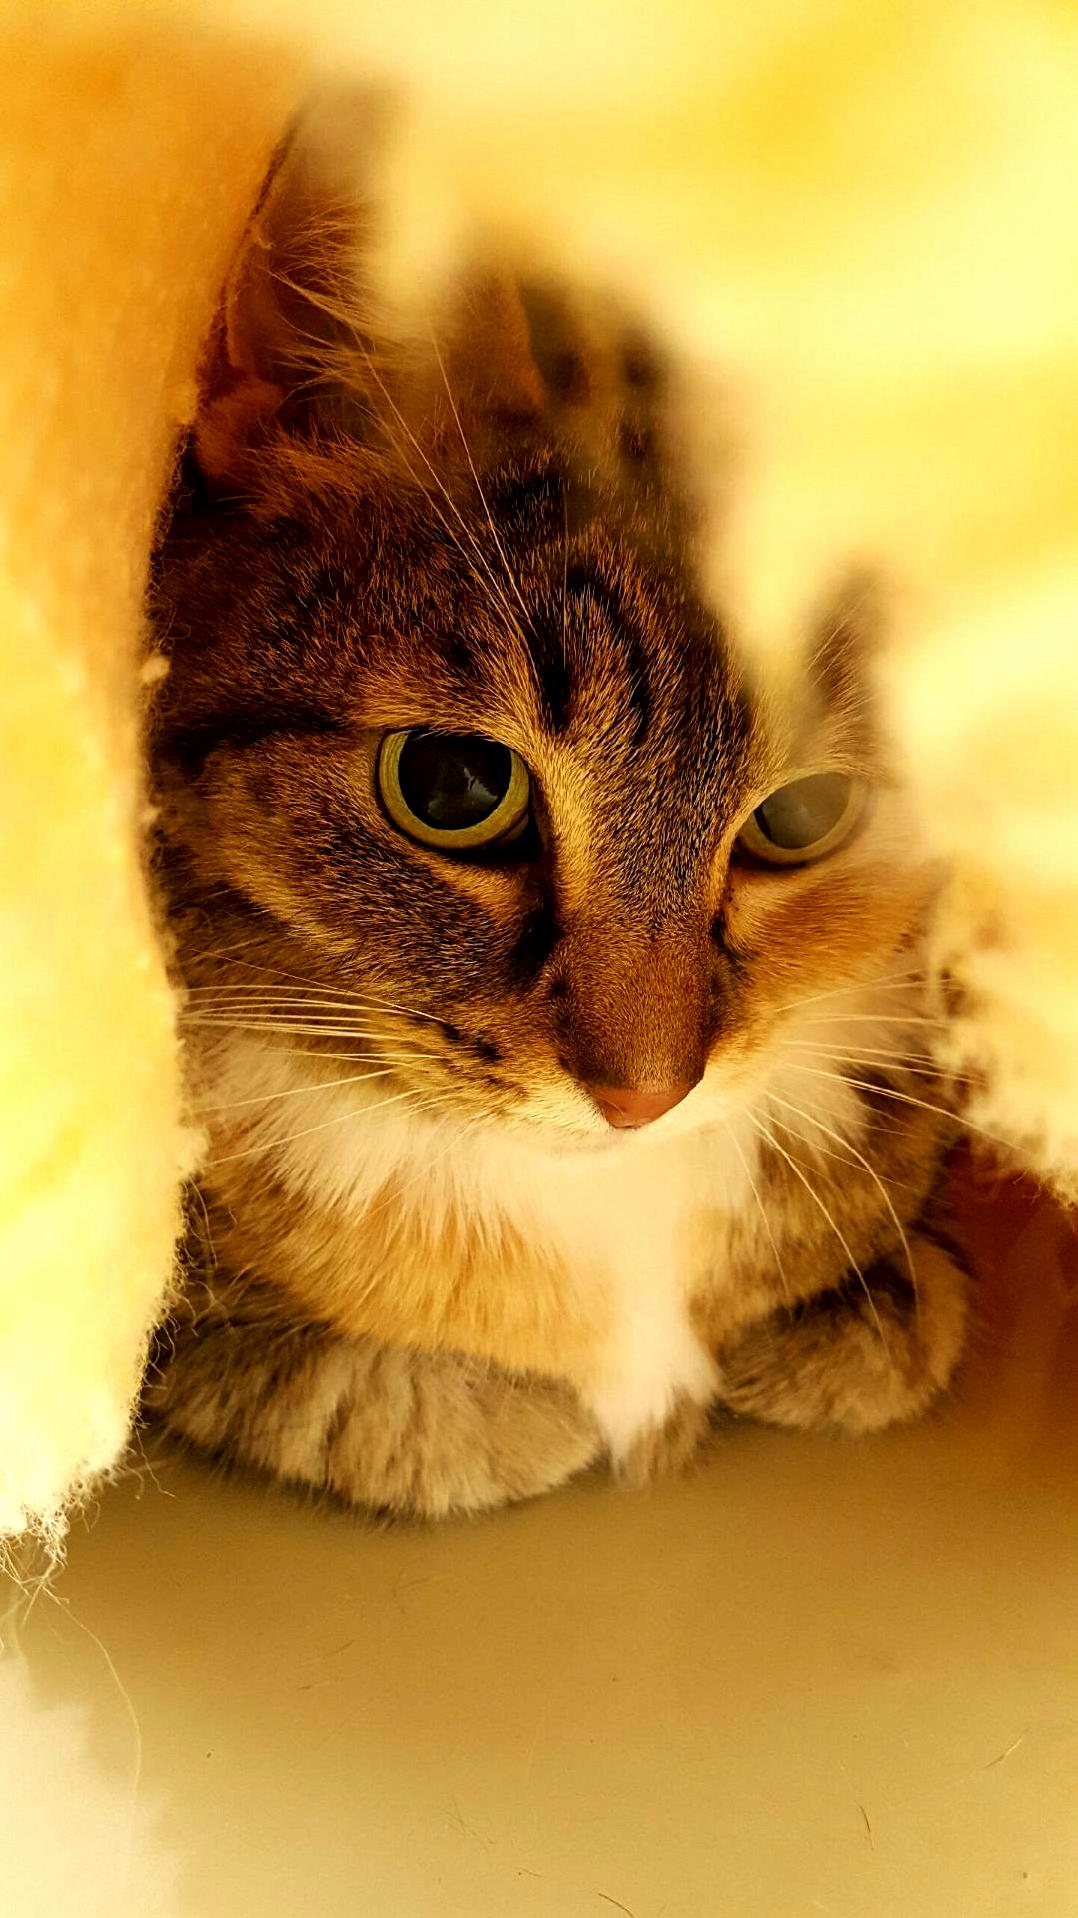 Sunny hiding under a rug at the vet